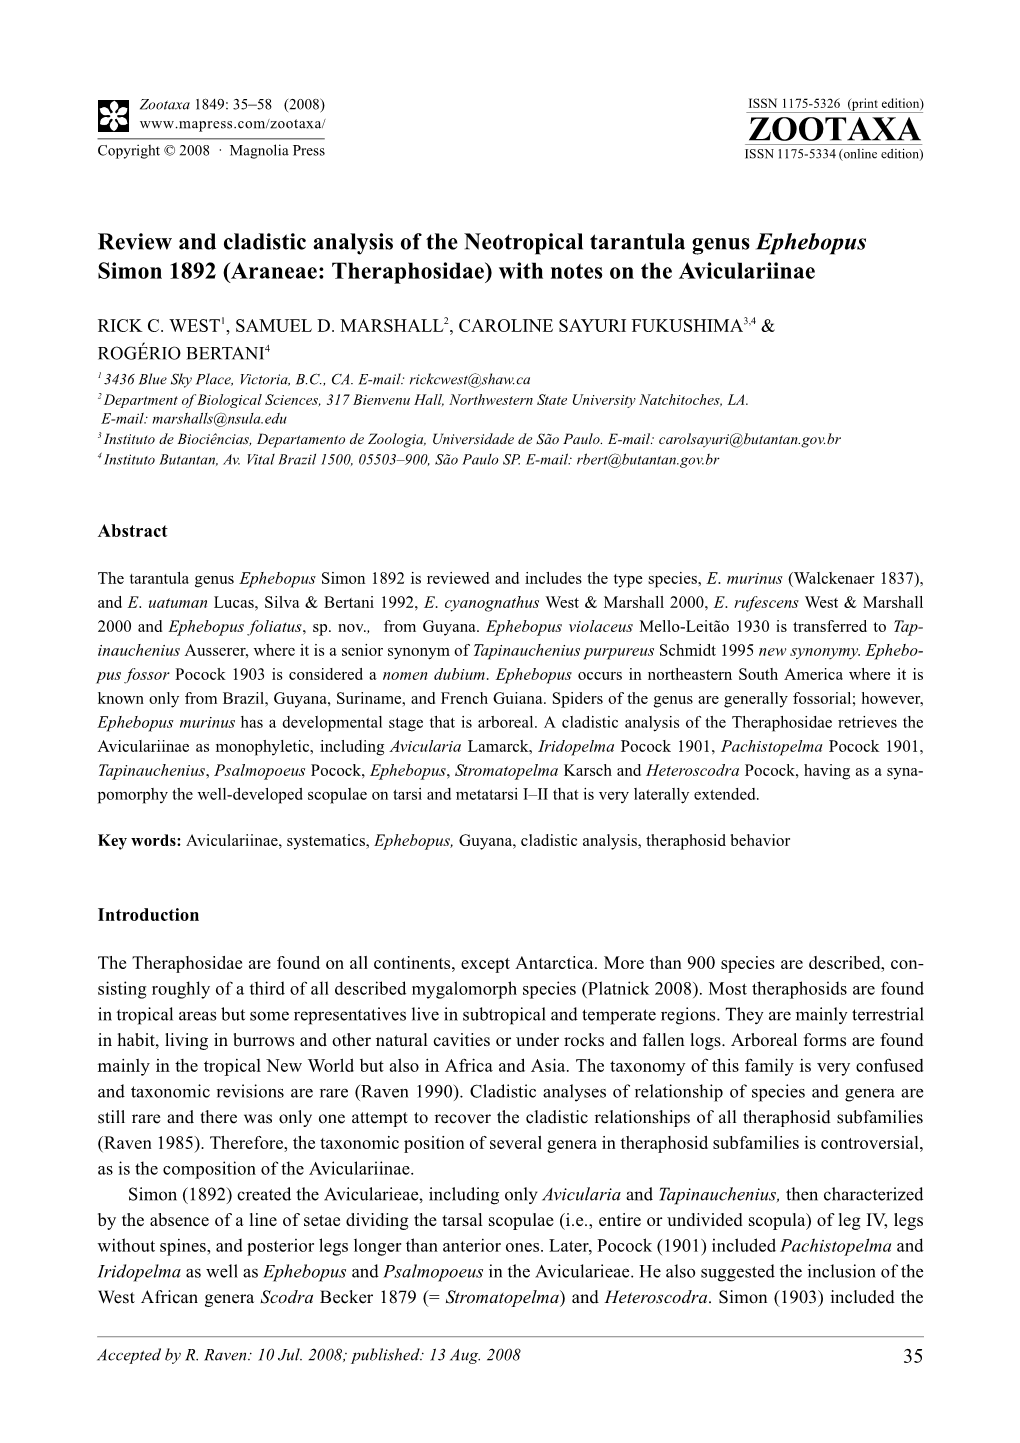 Zootaxa, Review and Cladistic Analysis of the Neotropical Tarantula Genus Ephebopus